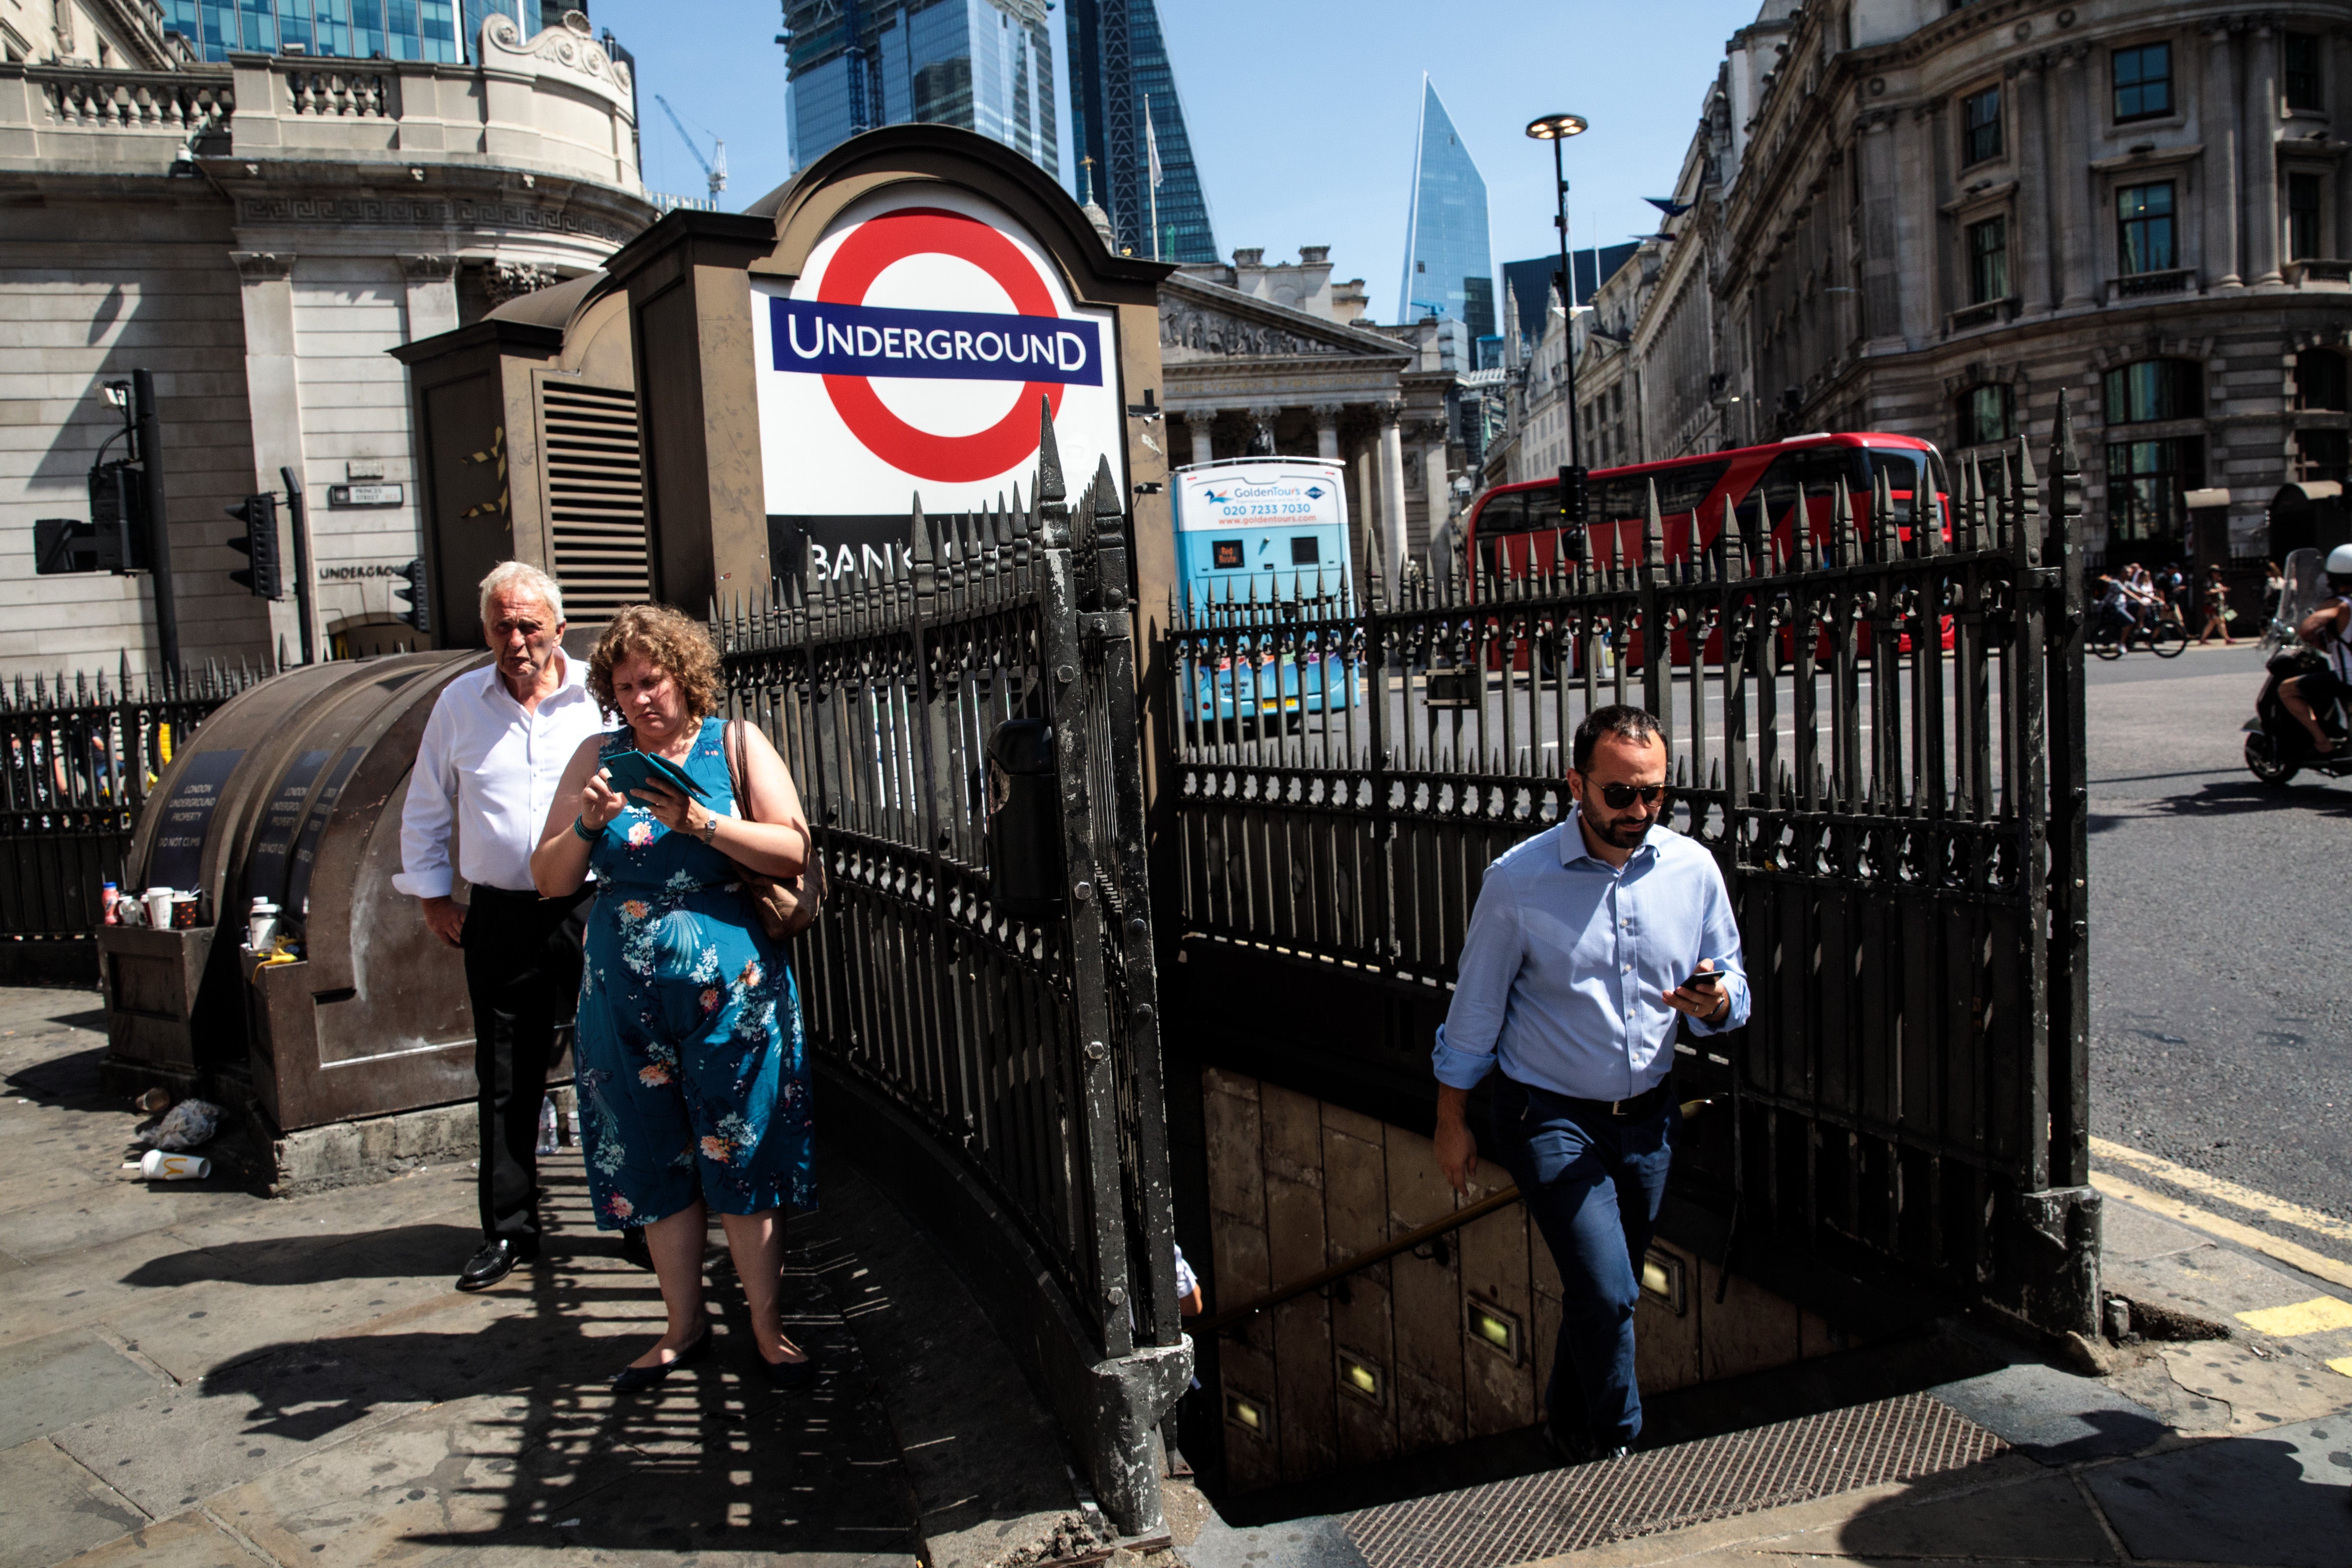 The London Underground shutdown will last from Sunday evening until Thursday night